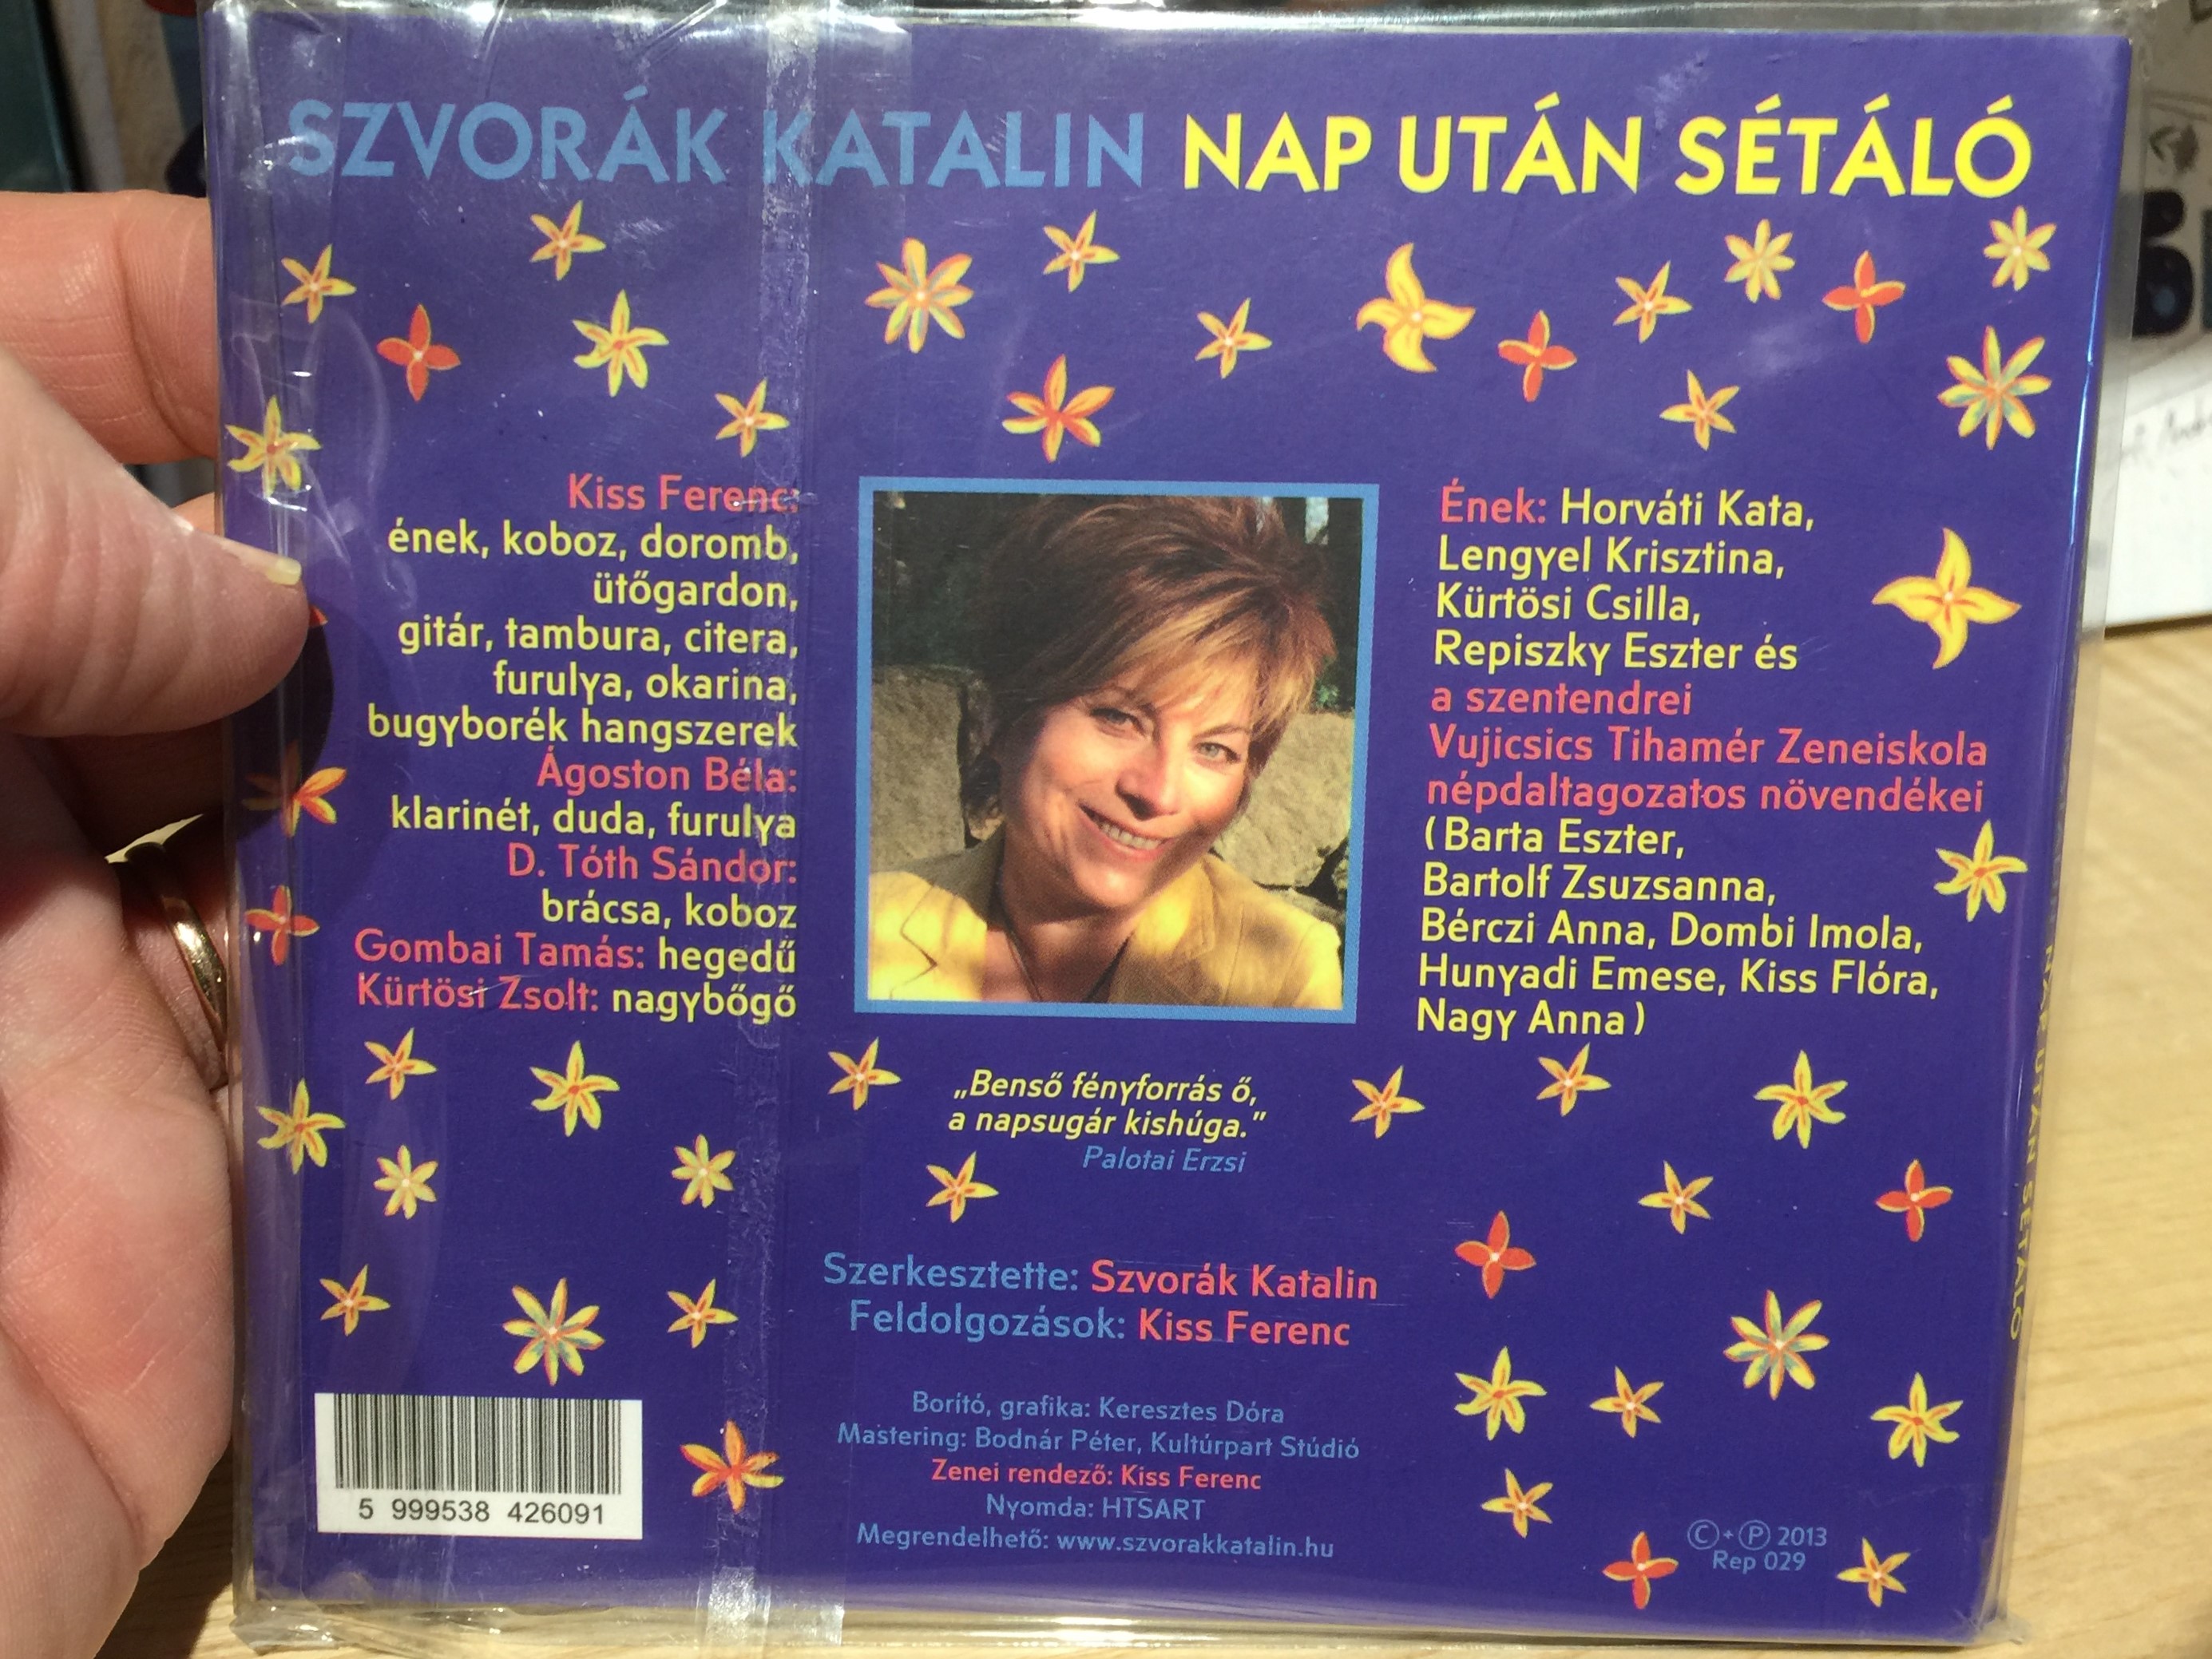 szvor-k-katalin-nap-ut-n-s-t-l-gyermekdalok-hungarian-folk-music-for-children-rep-audio-cd-2013-rep-029-2-.jpg